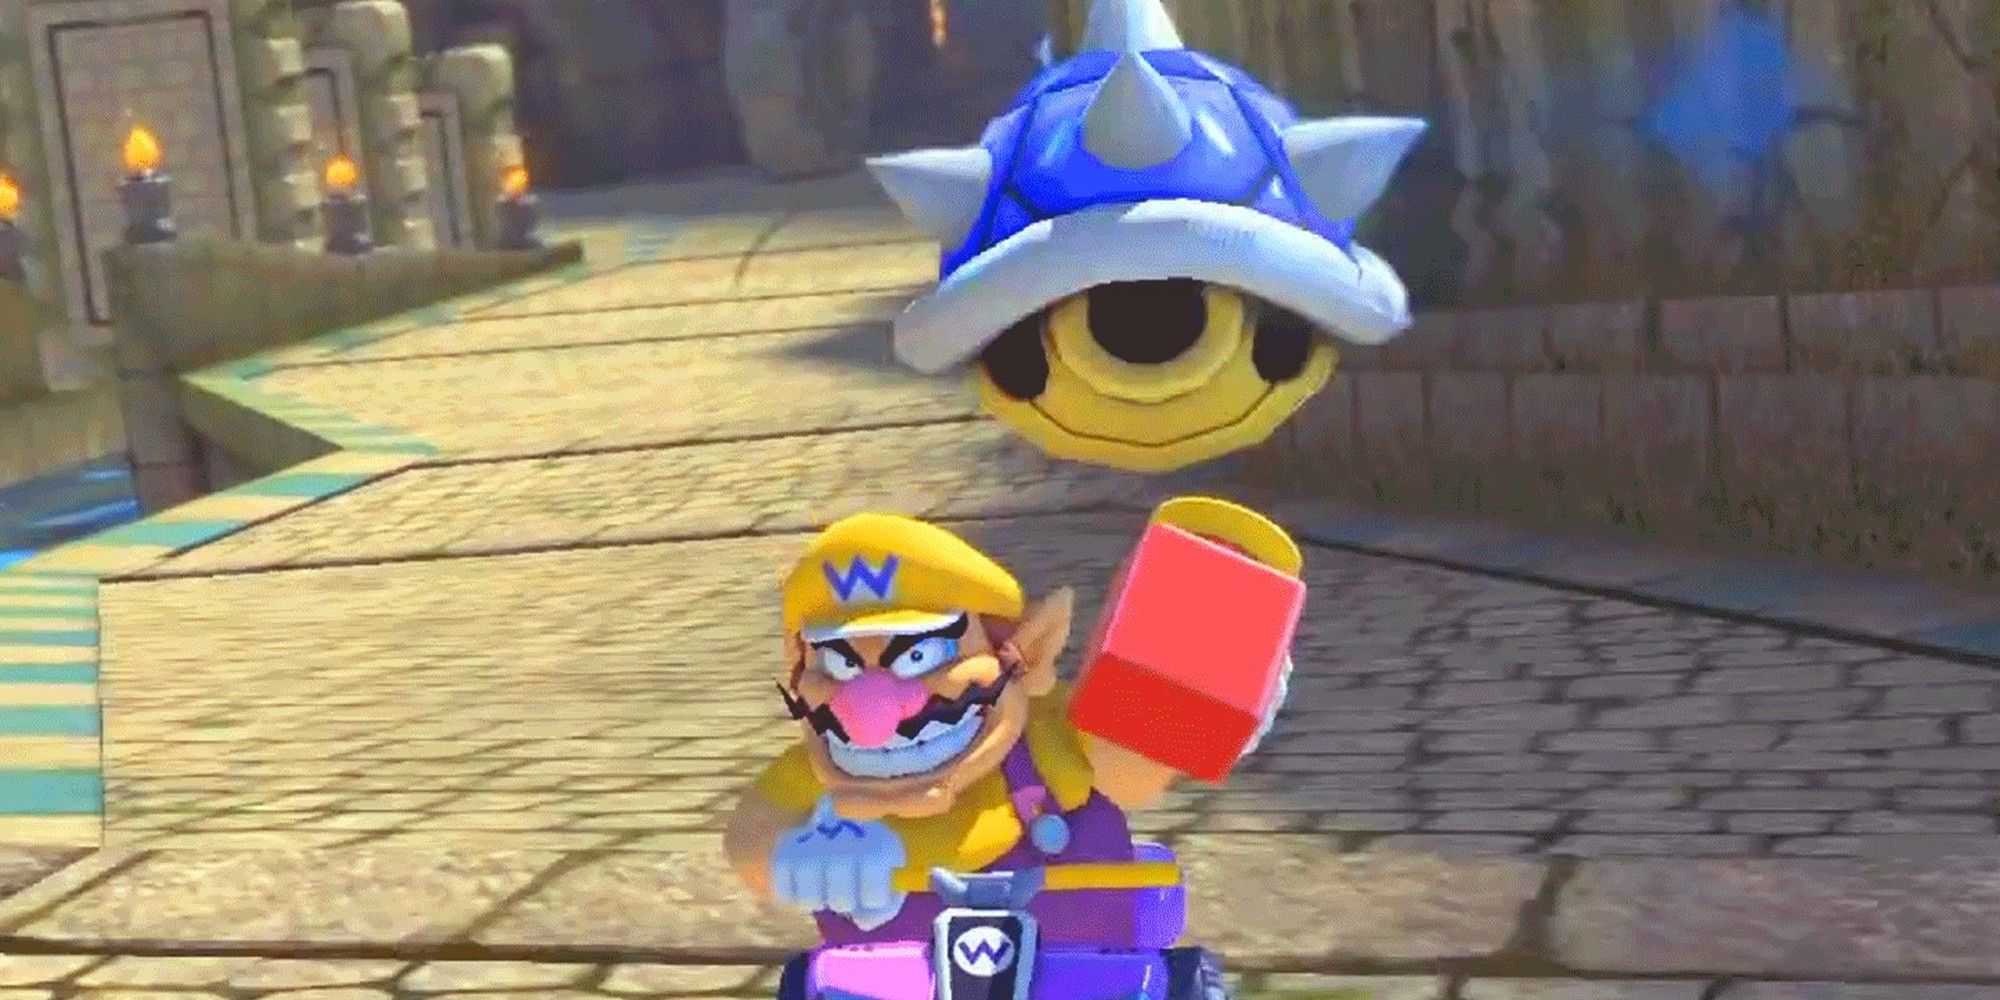 The blue shell isn't Mario Kart's best item.